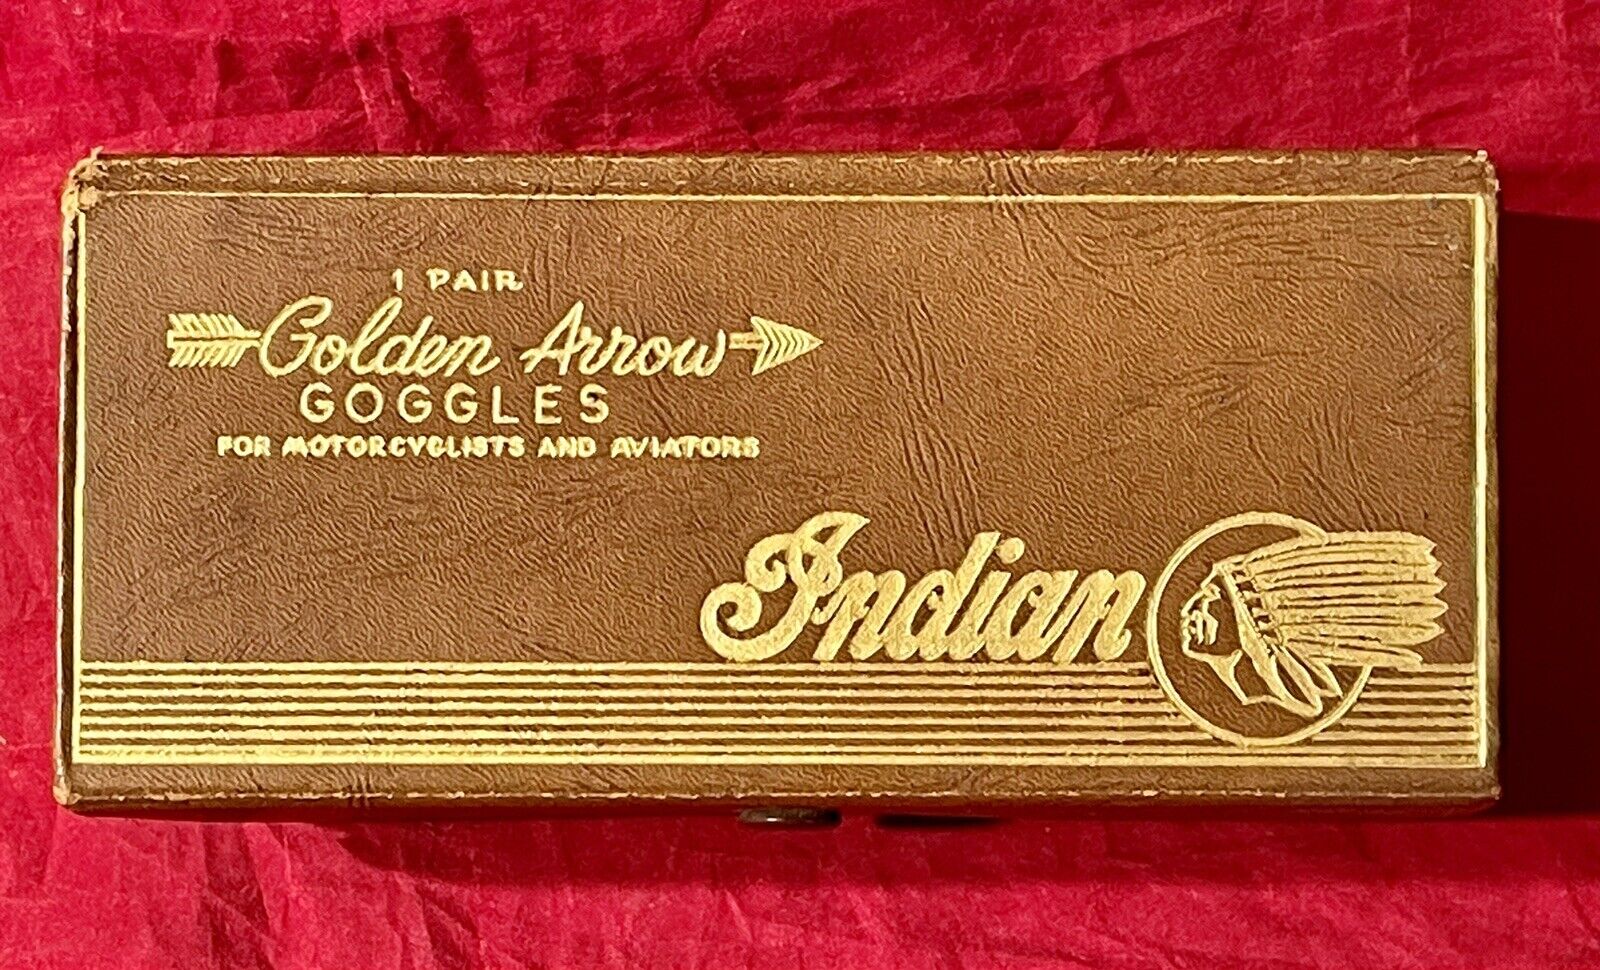 Vintage Indian Motorcycles Golden Arrow Goggles Box Ultra Rare EMPTY Collectible